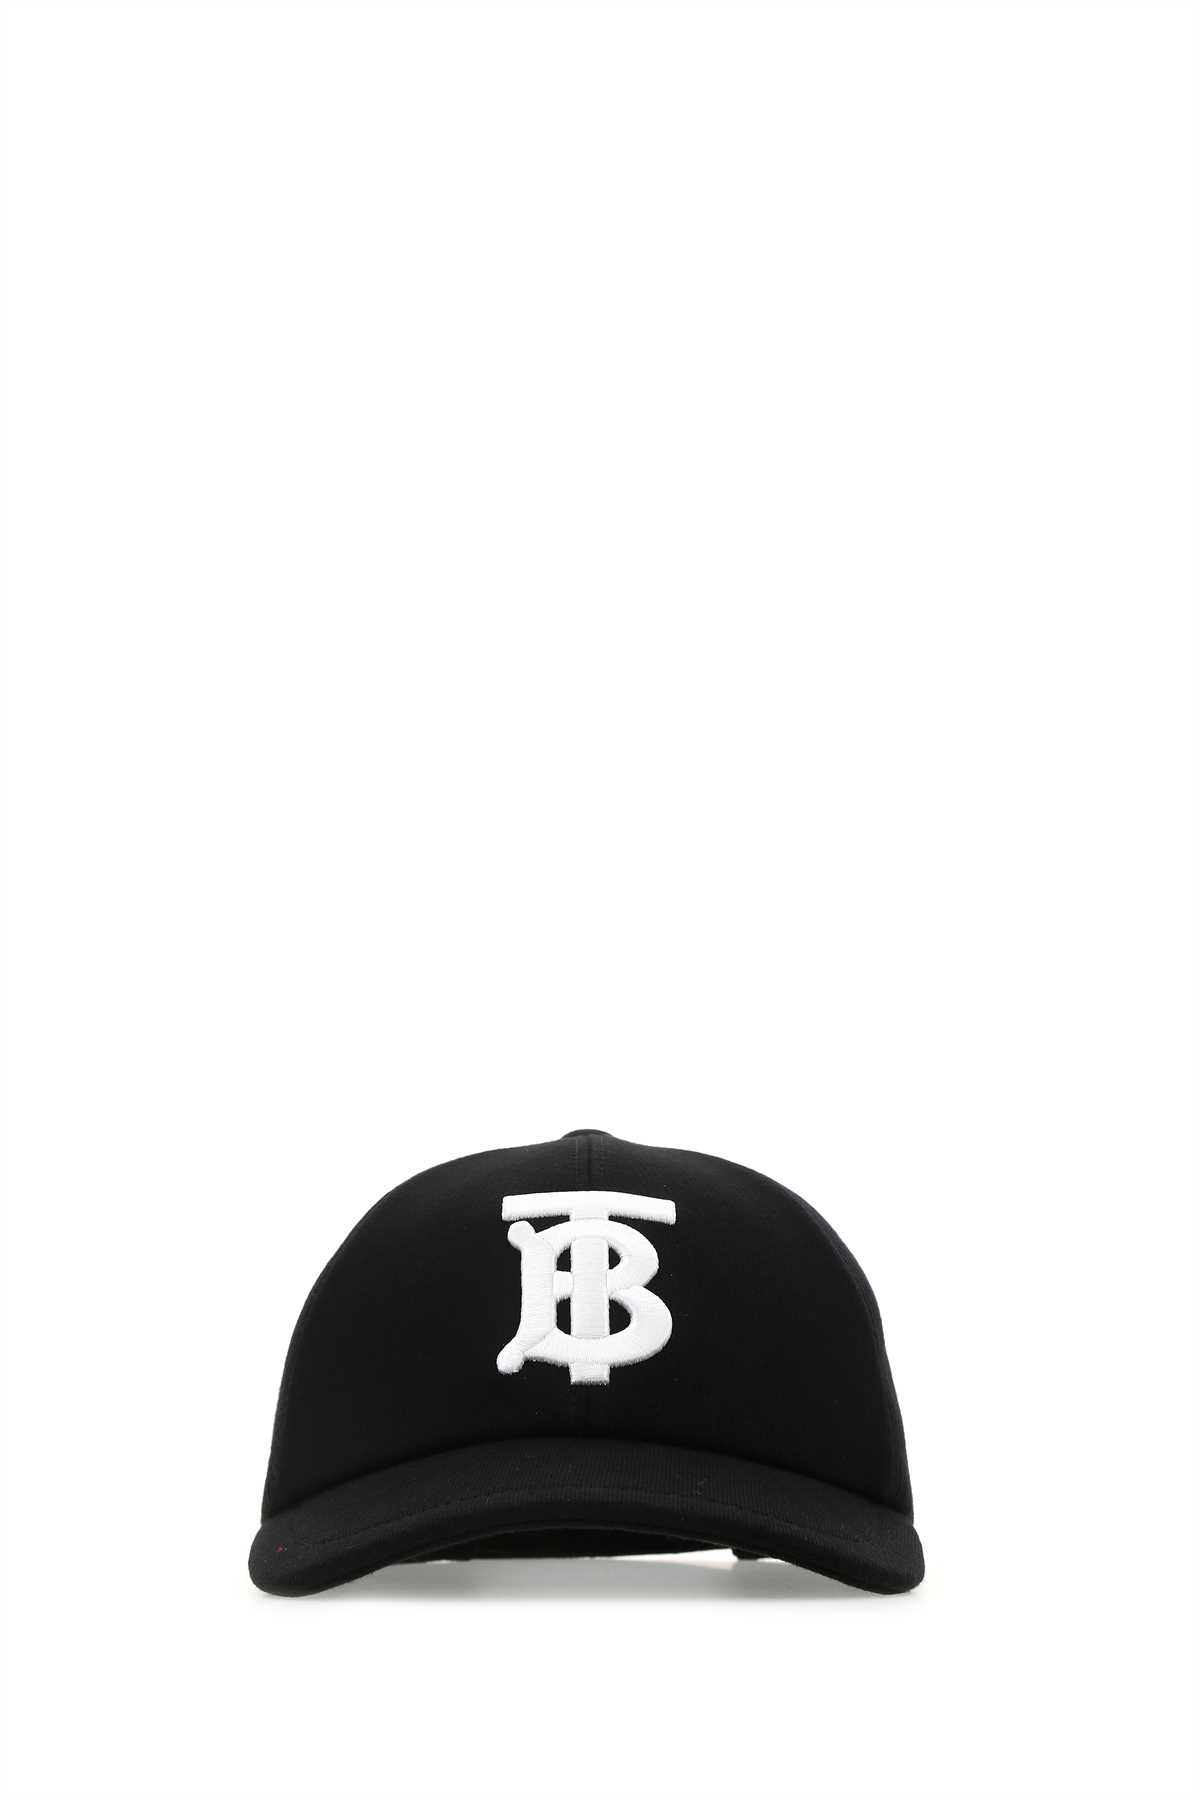 Shop Burberry Black Cotton Baseball Cap